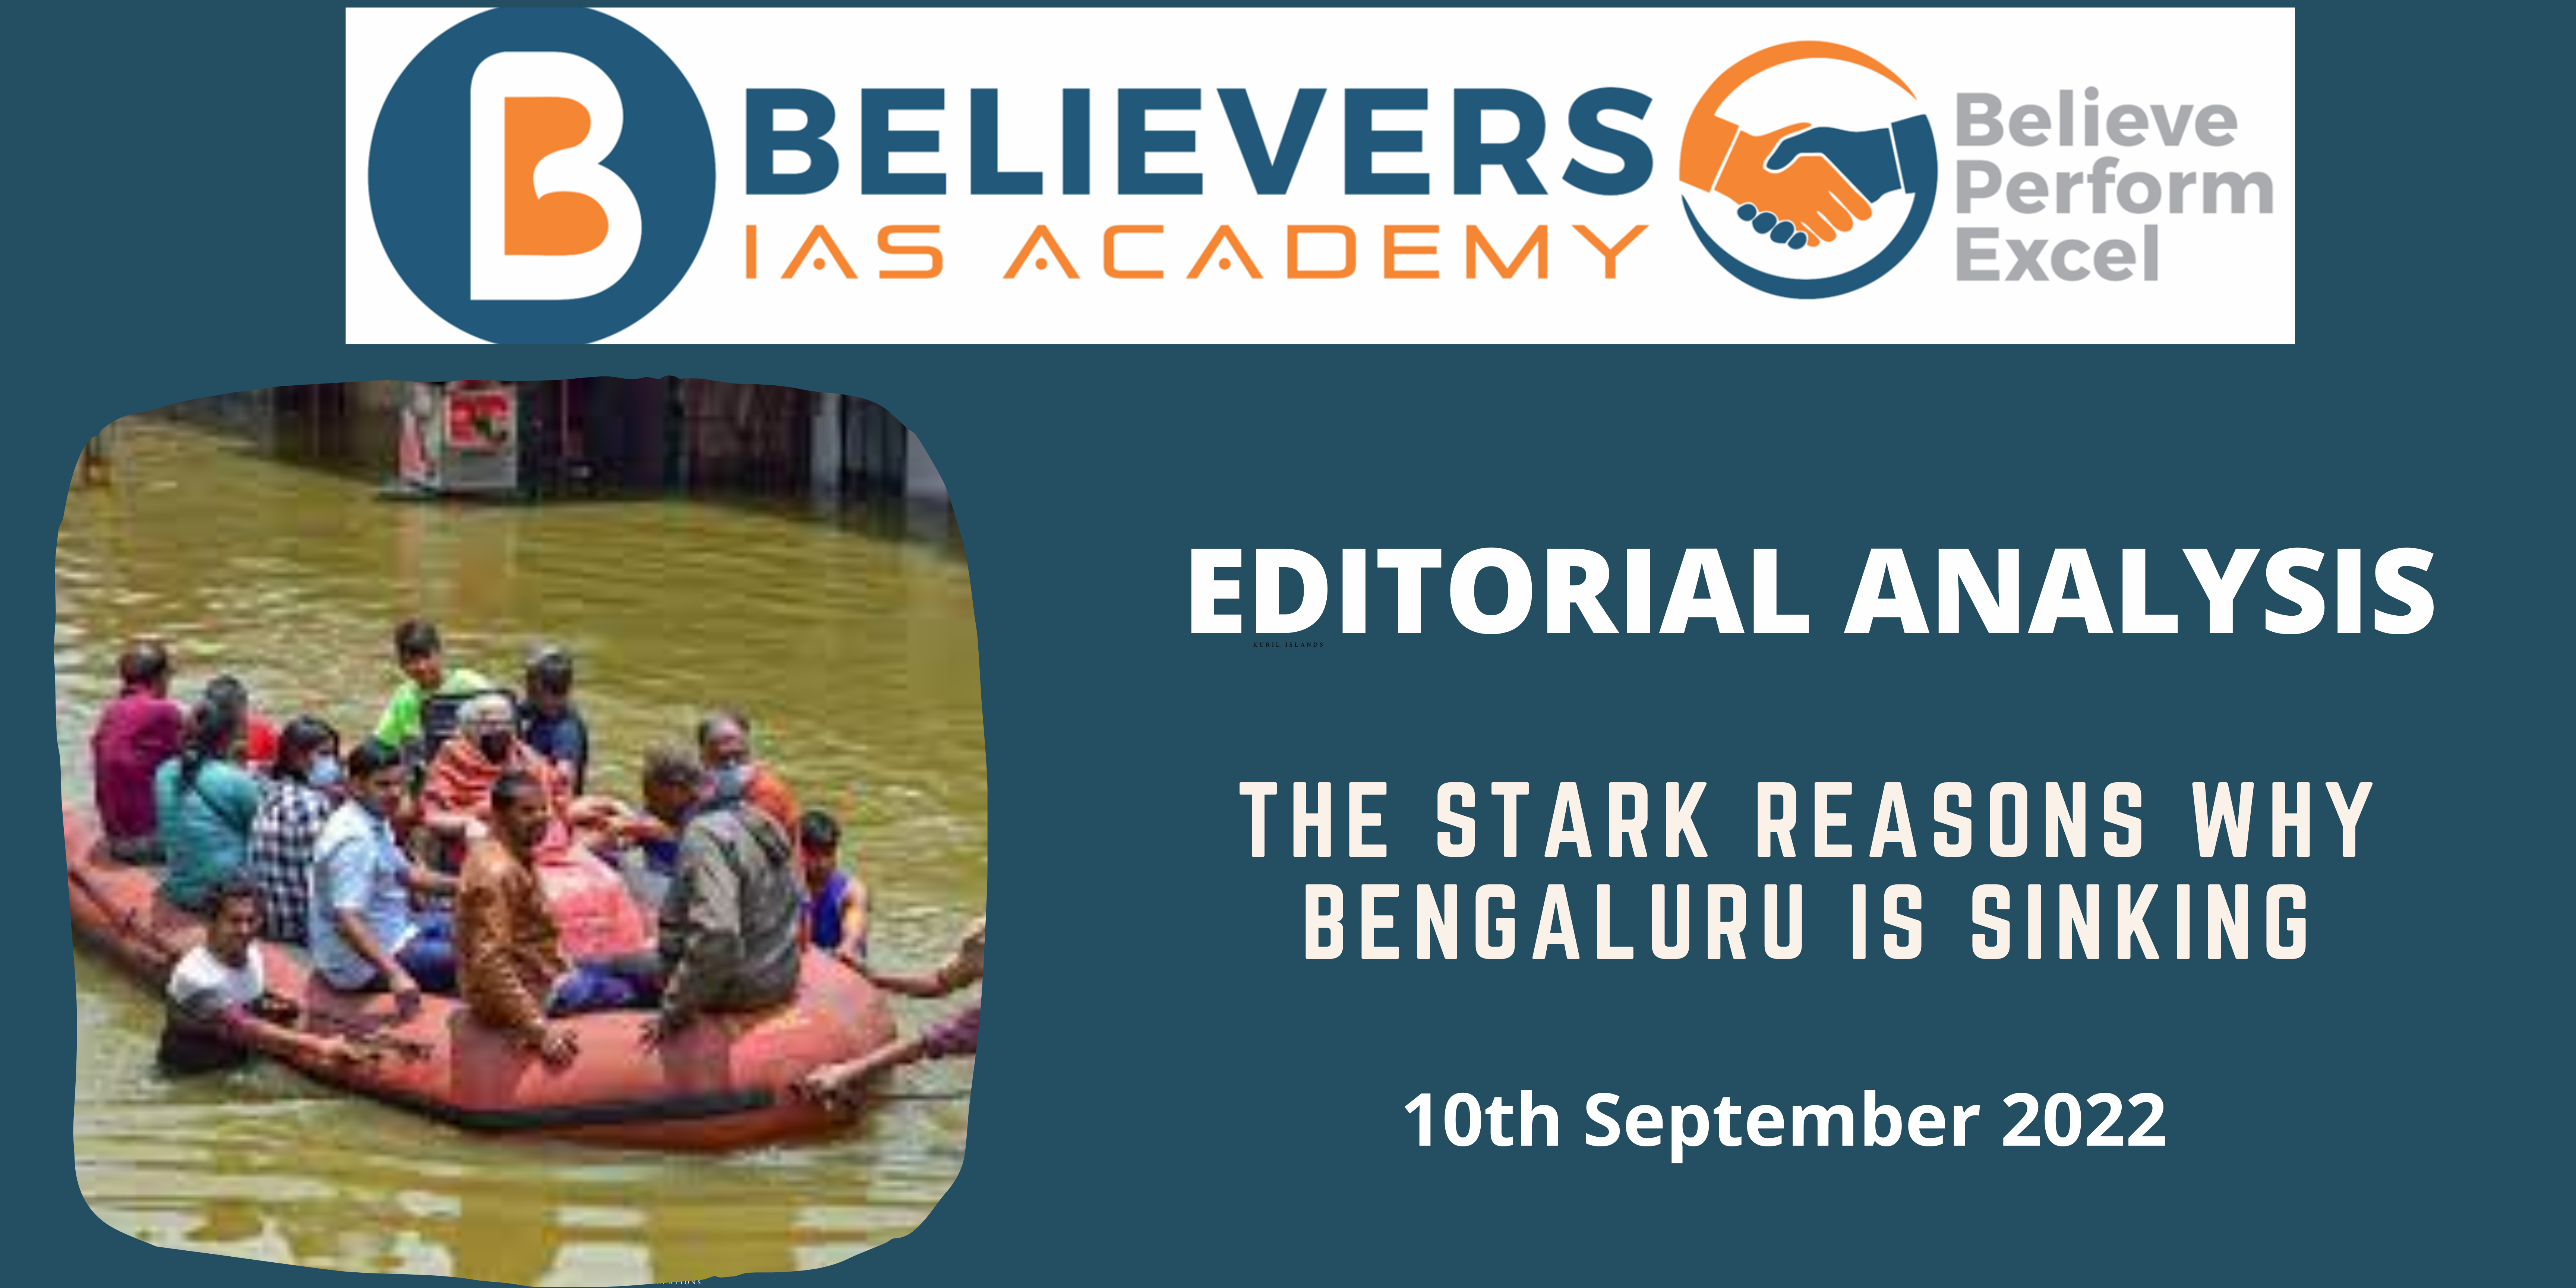 The stark reasons why Bengaluru is sinking